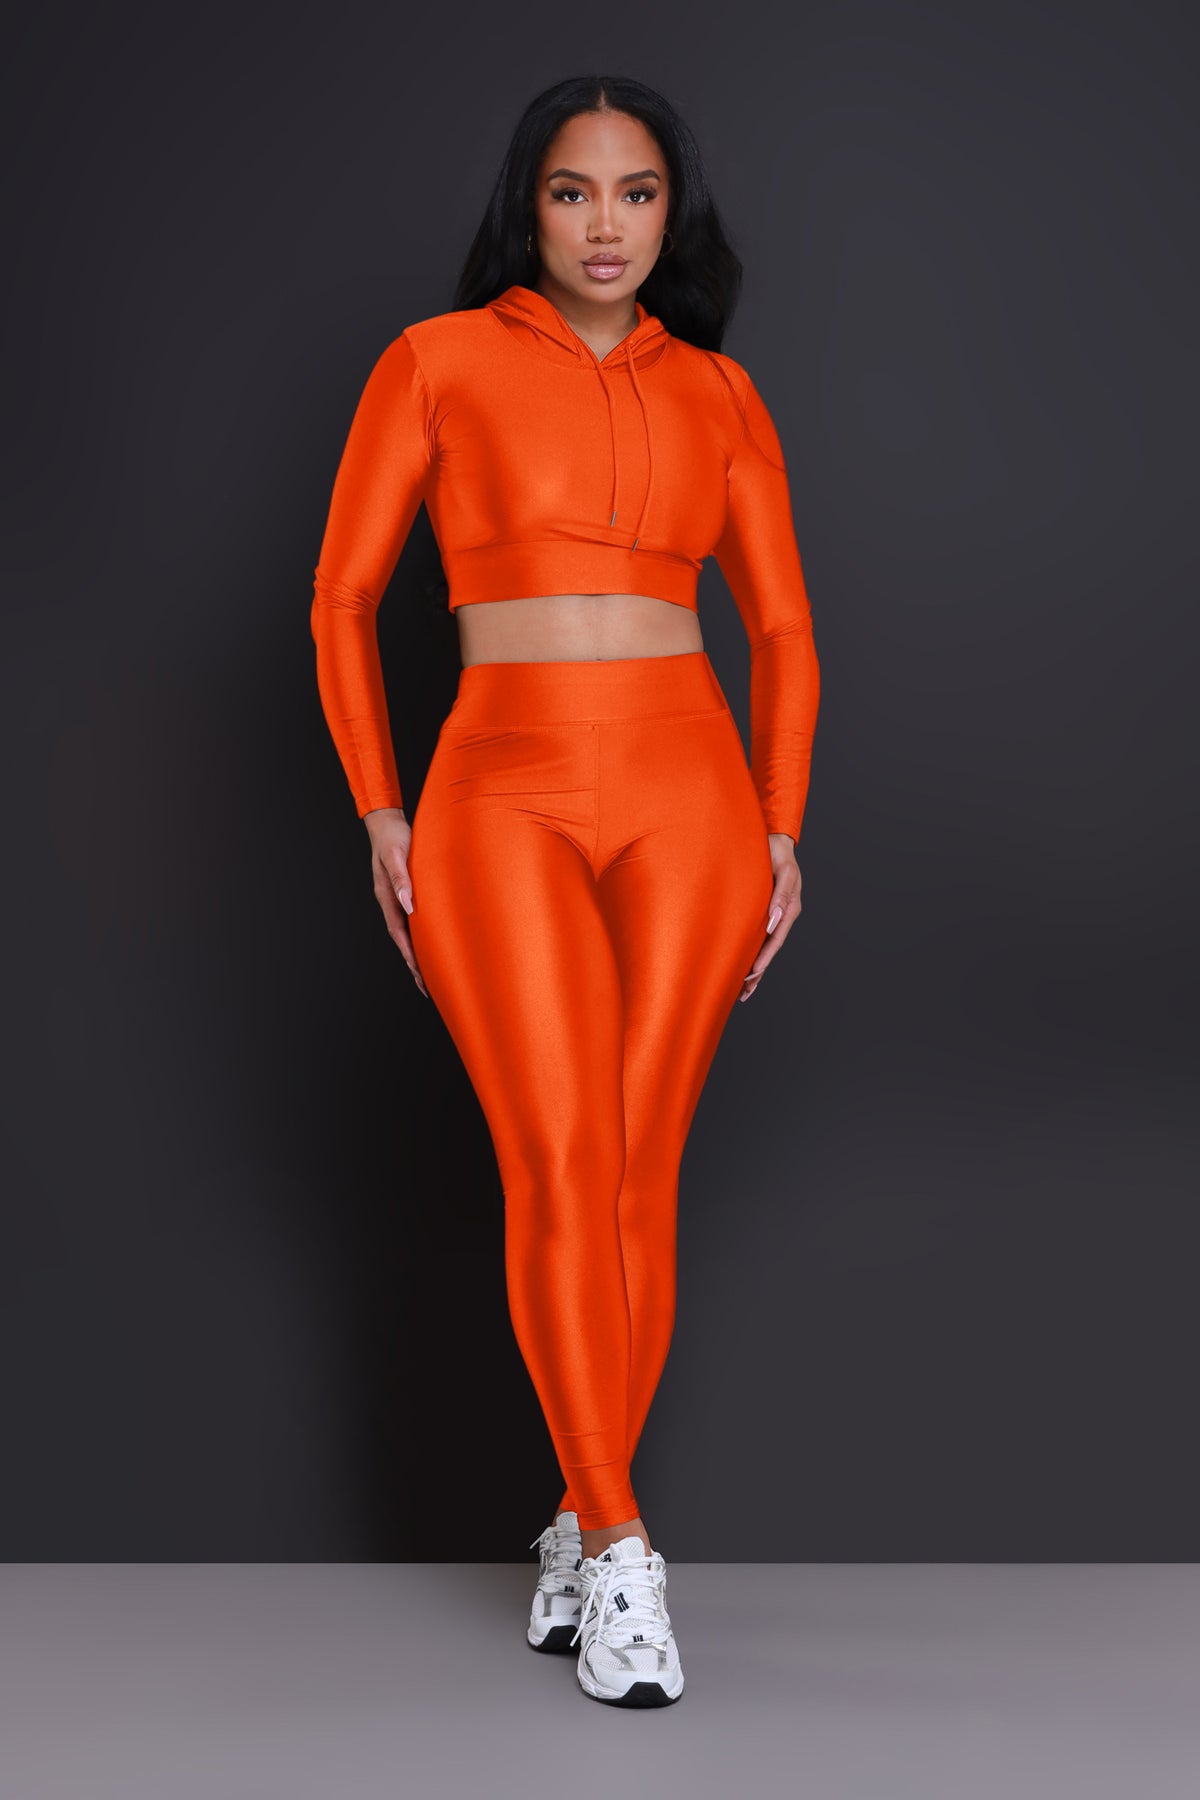 
              Big Ego Cropped Hooded Legging Set - Neon Orange - Swank A Posh
            